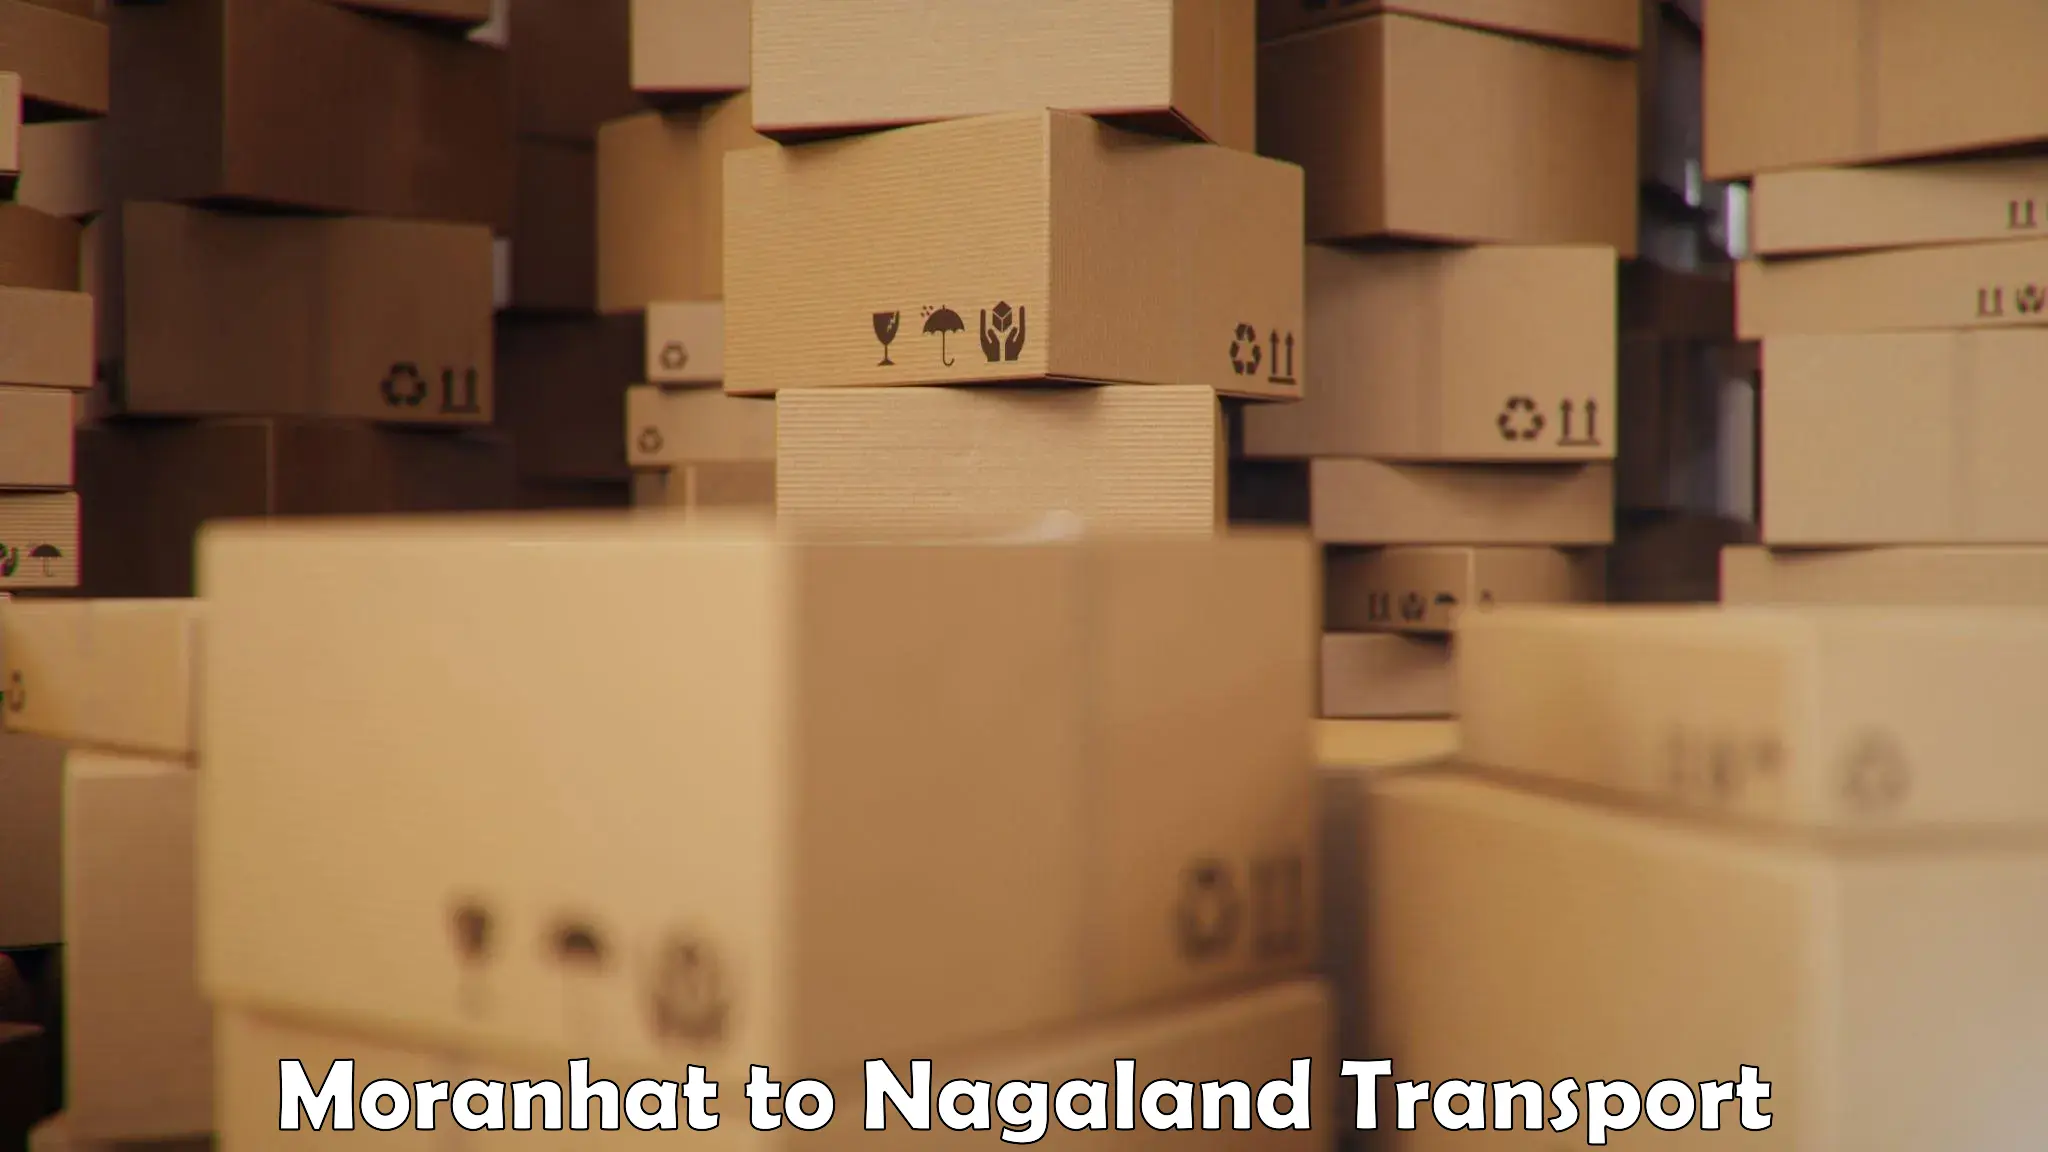 Shipping partner Moranhat to NIT Nagaland